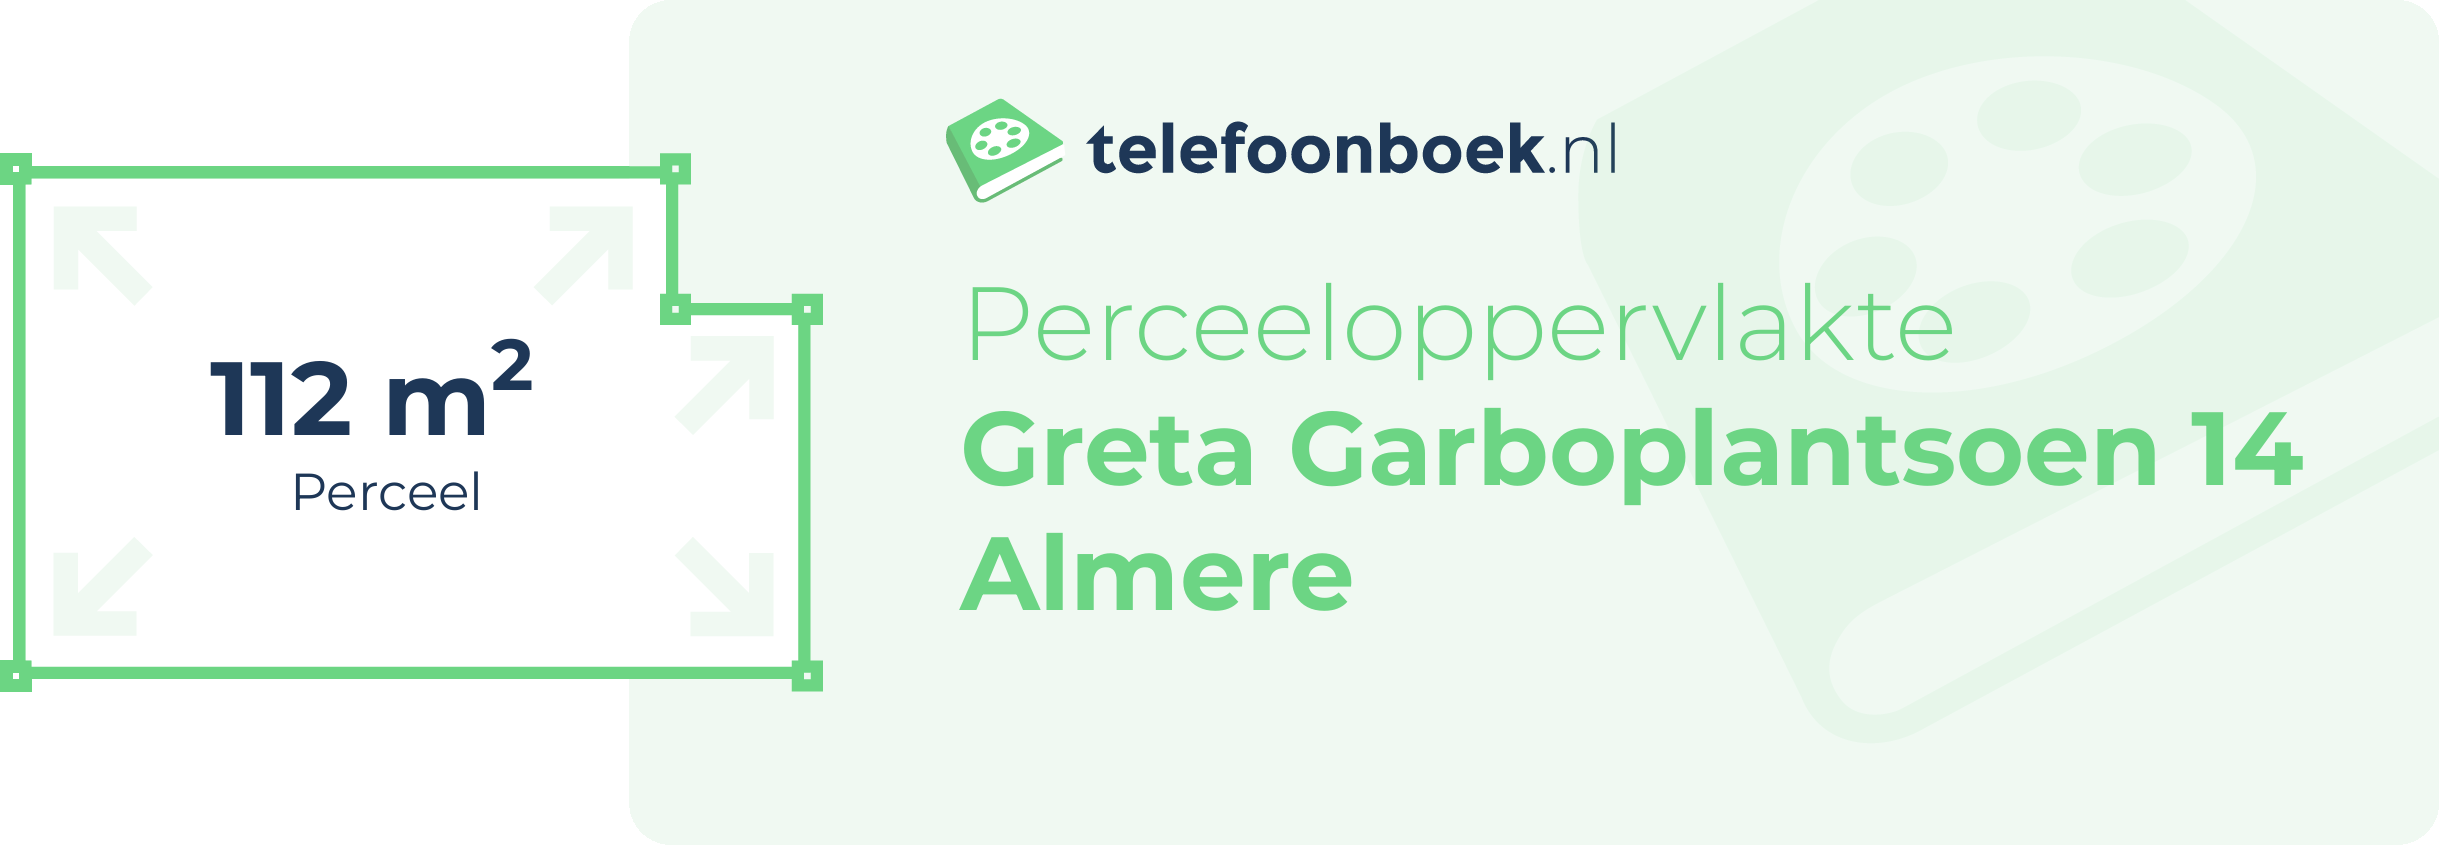 Perceeloppervlakte Greta Garboplantsoen 14 Almere